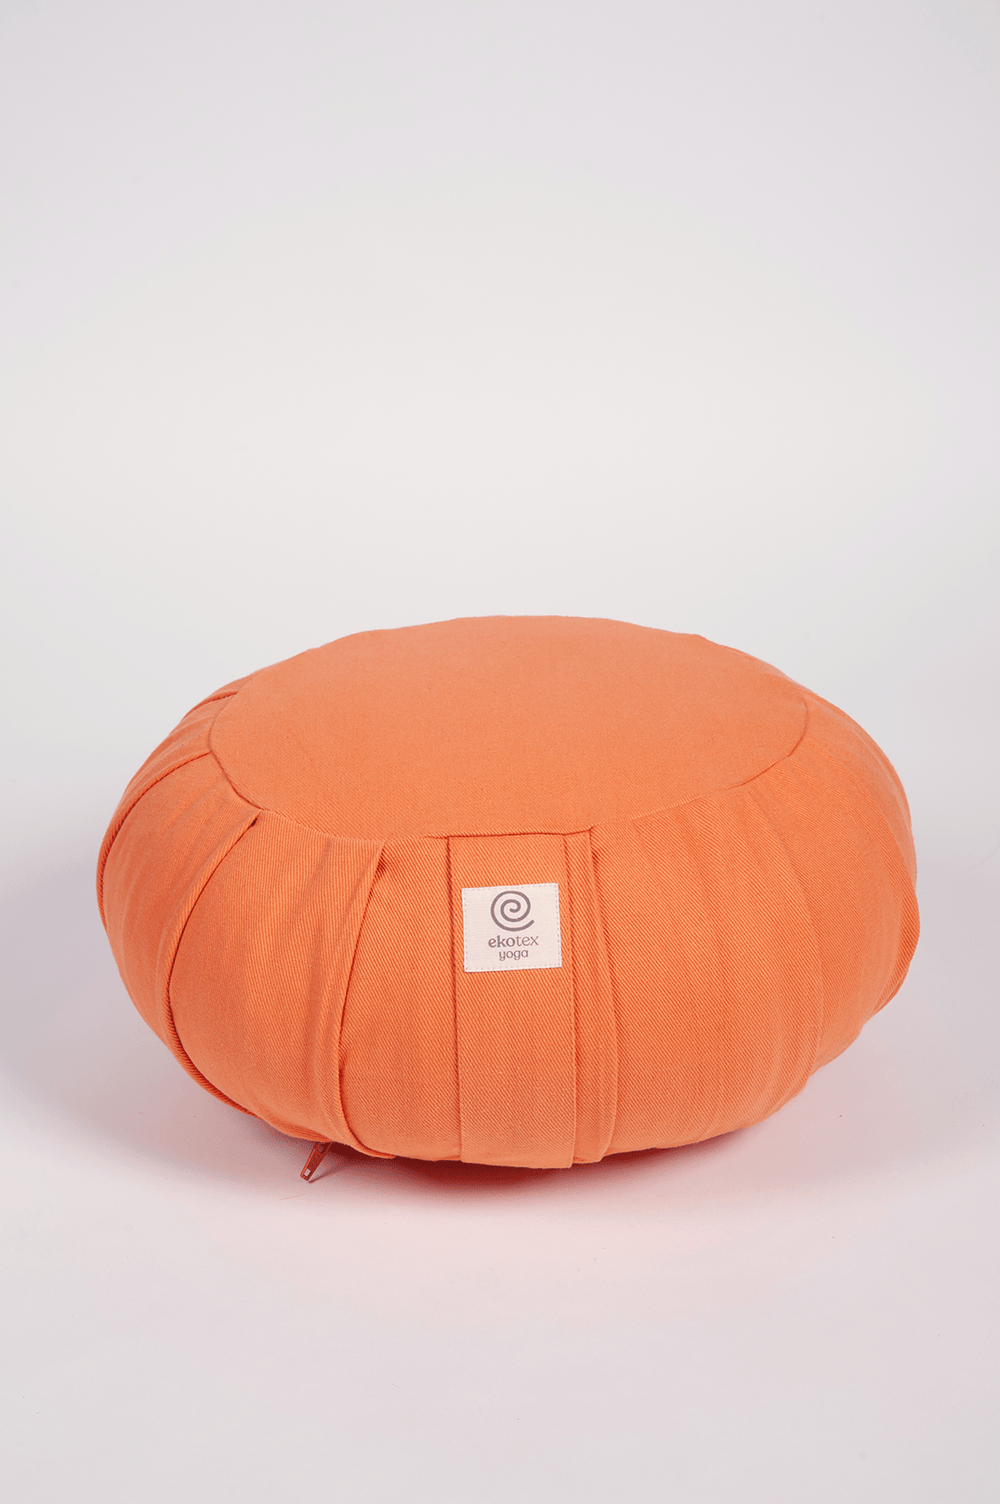 Meditation Cushions Apricot Round Zafu Cushion Cover